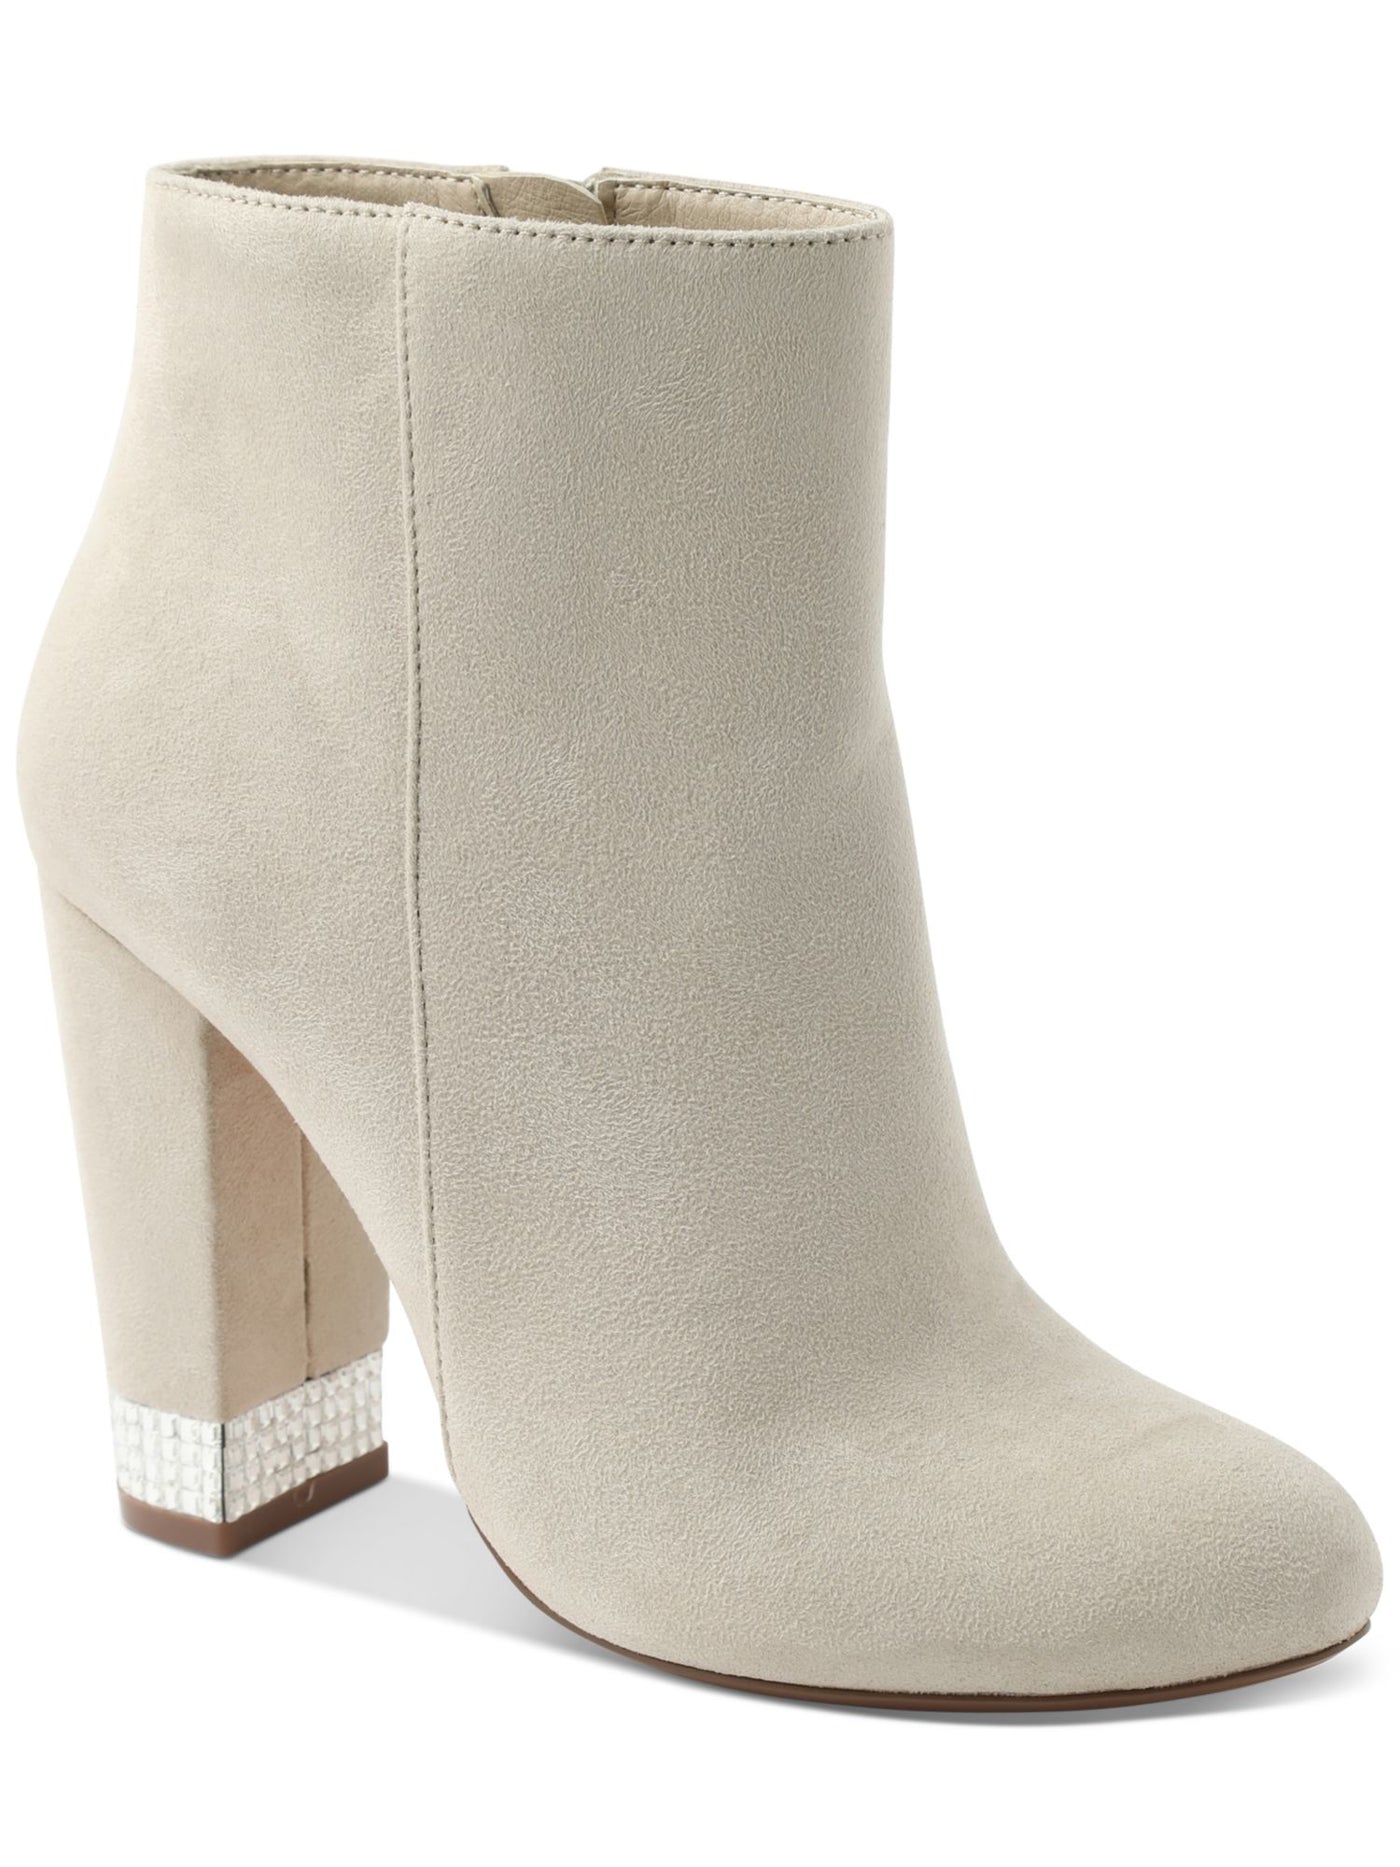 XOXO Womens Beige Comfort Rhinestone Yardria Round Toe Block Heel Zip-Up Boots Shoes 7.5